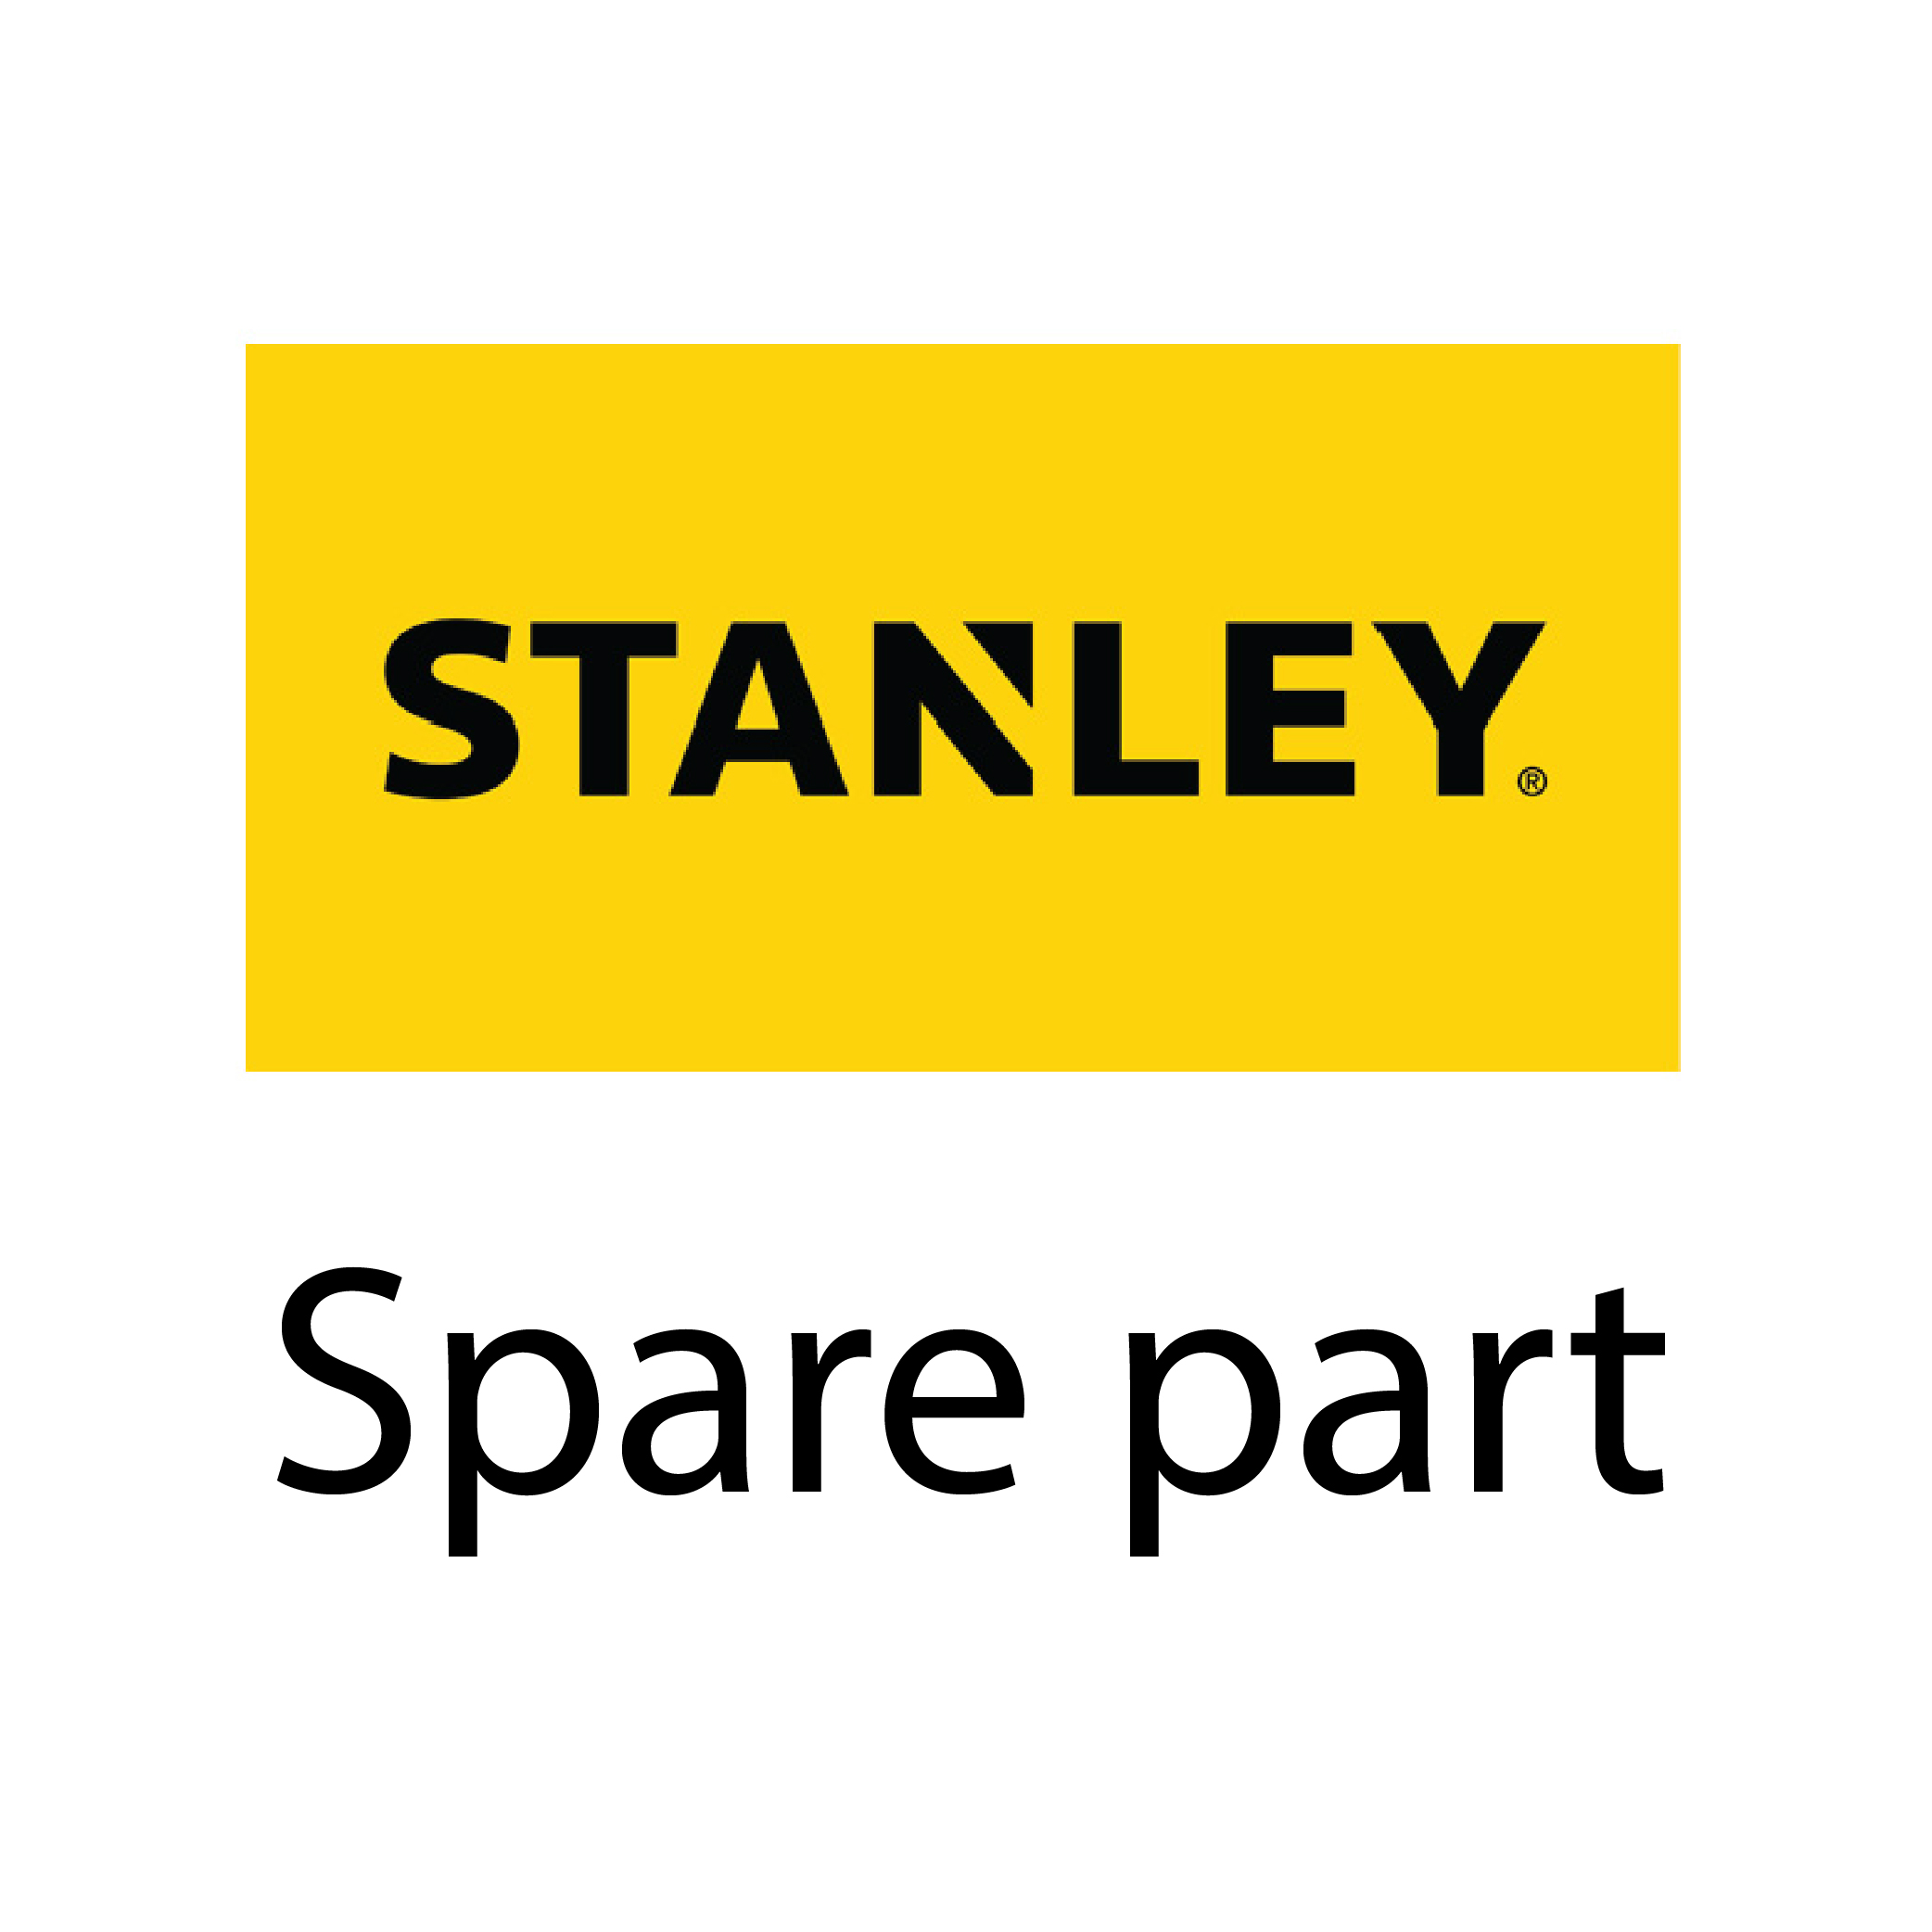 SKI - สกี จำหน่ายสินค้าหลากหลาย และคุณภาพดี | STANLEY #90535722 ทุ่น STEL105